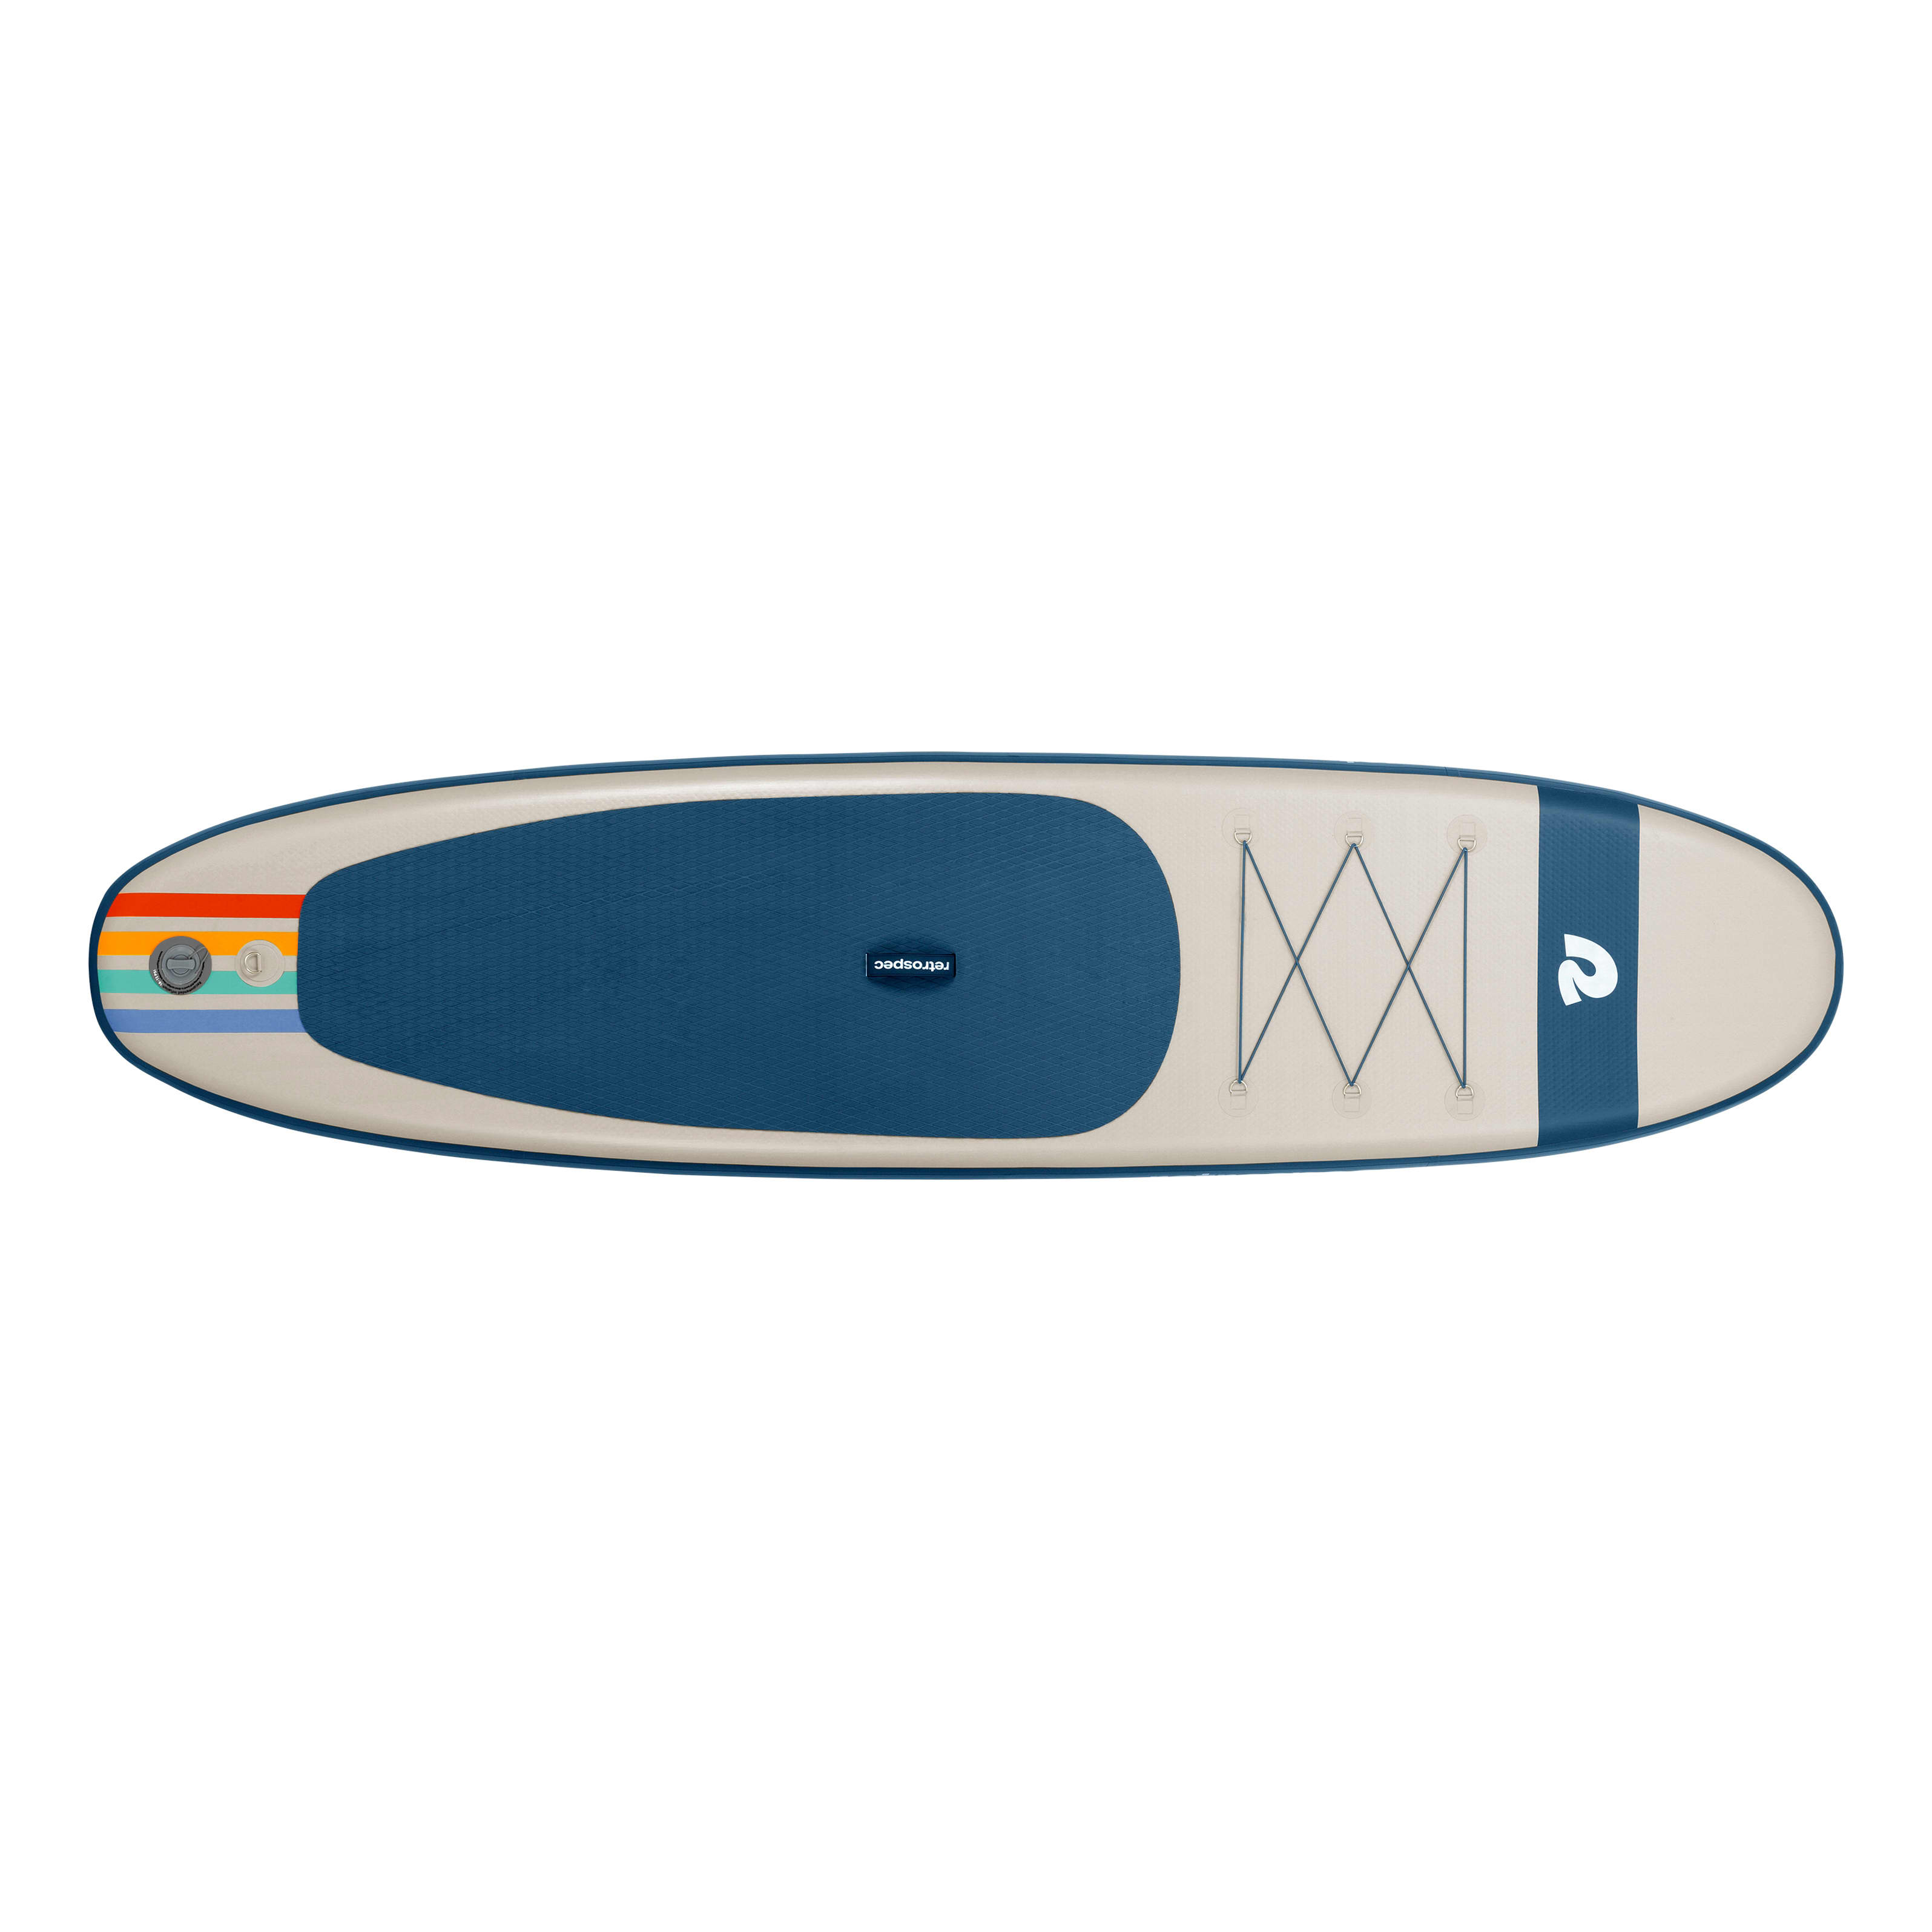 Retrospec Weekender Inflatable Paddle Board - Navy Zion